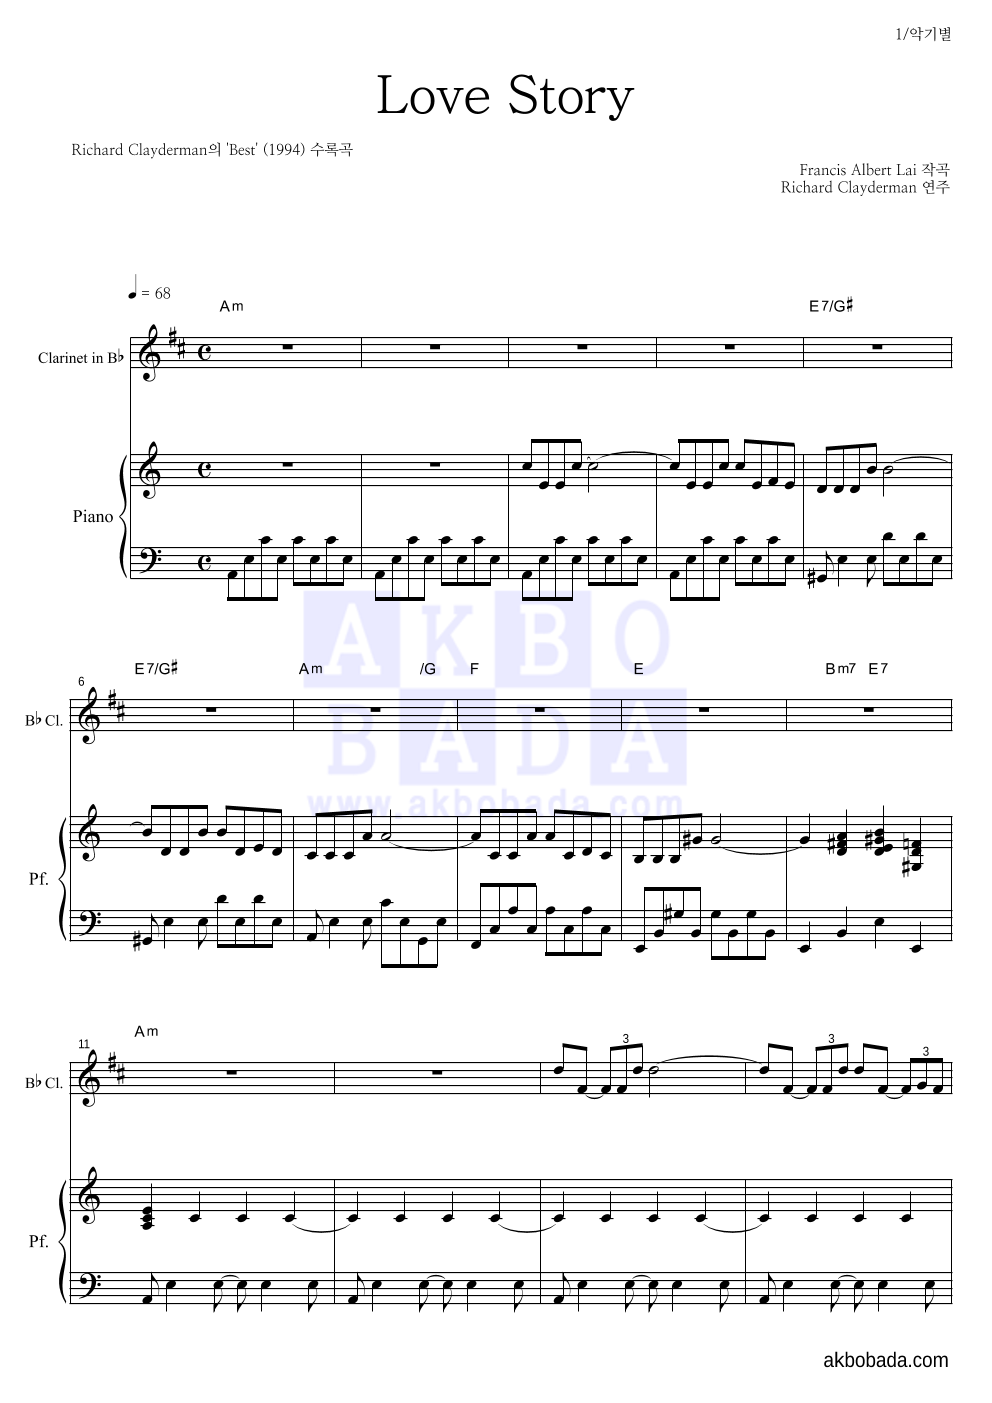 Richard Clayderman  - Love Story 클라리넷&피아노 악보 